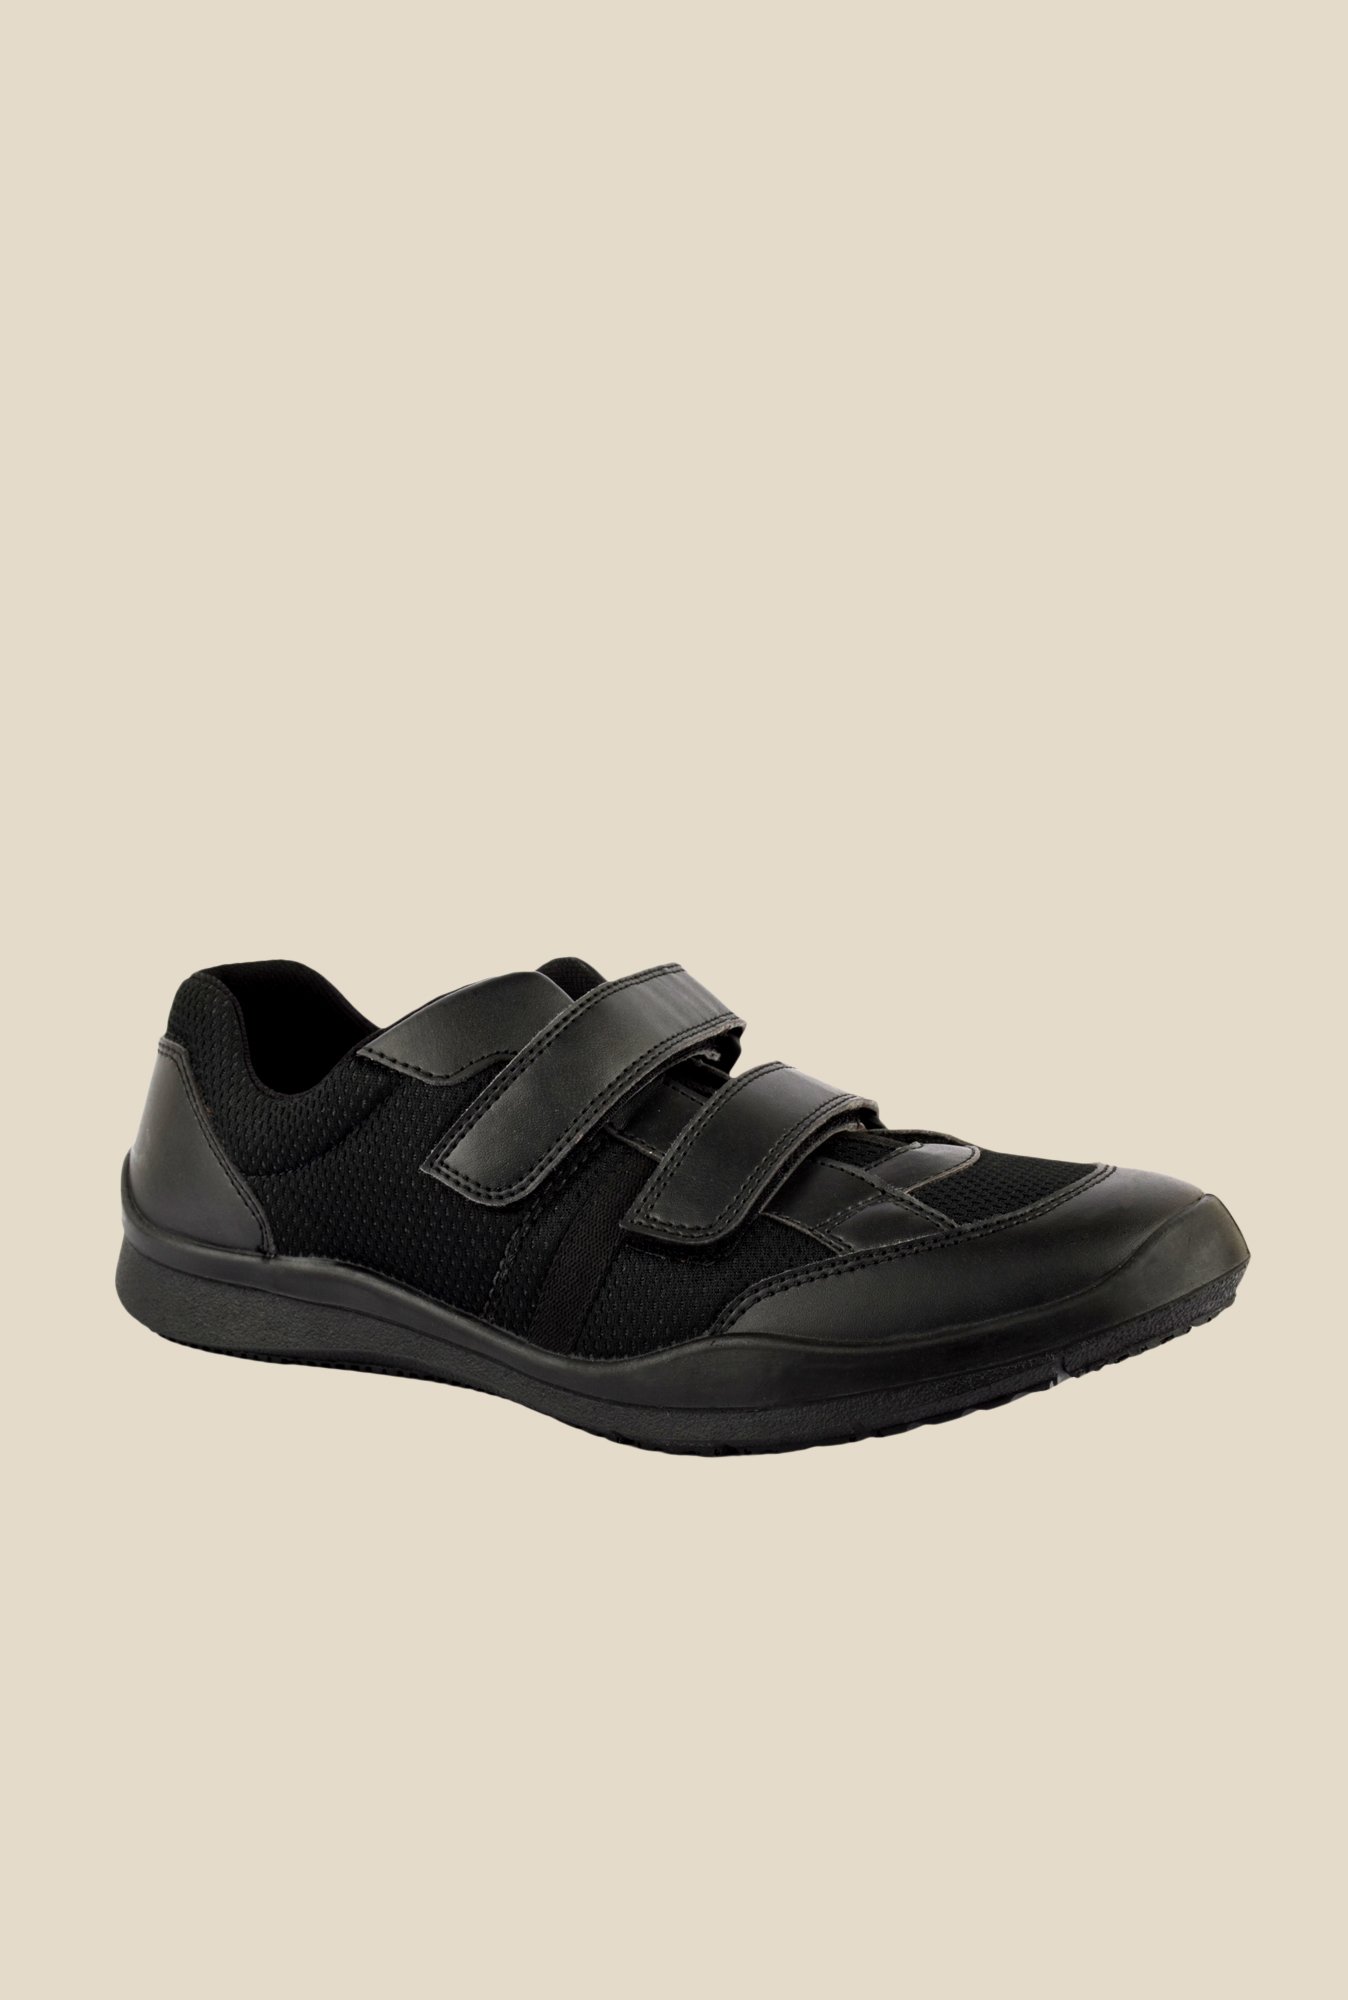 Black Sneakers For Men Online At Tata CLiQ